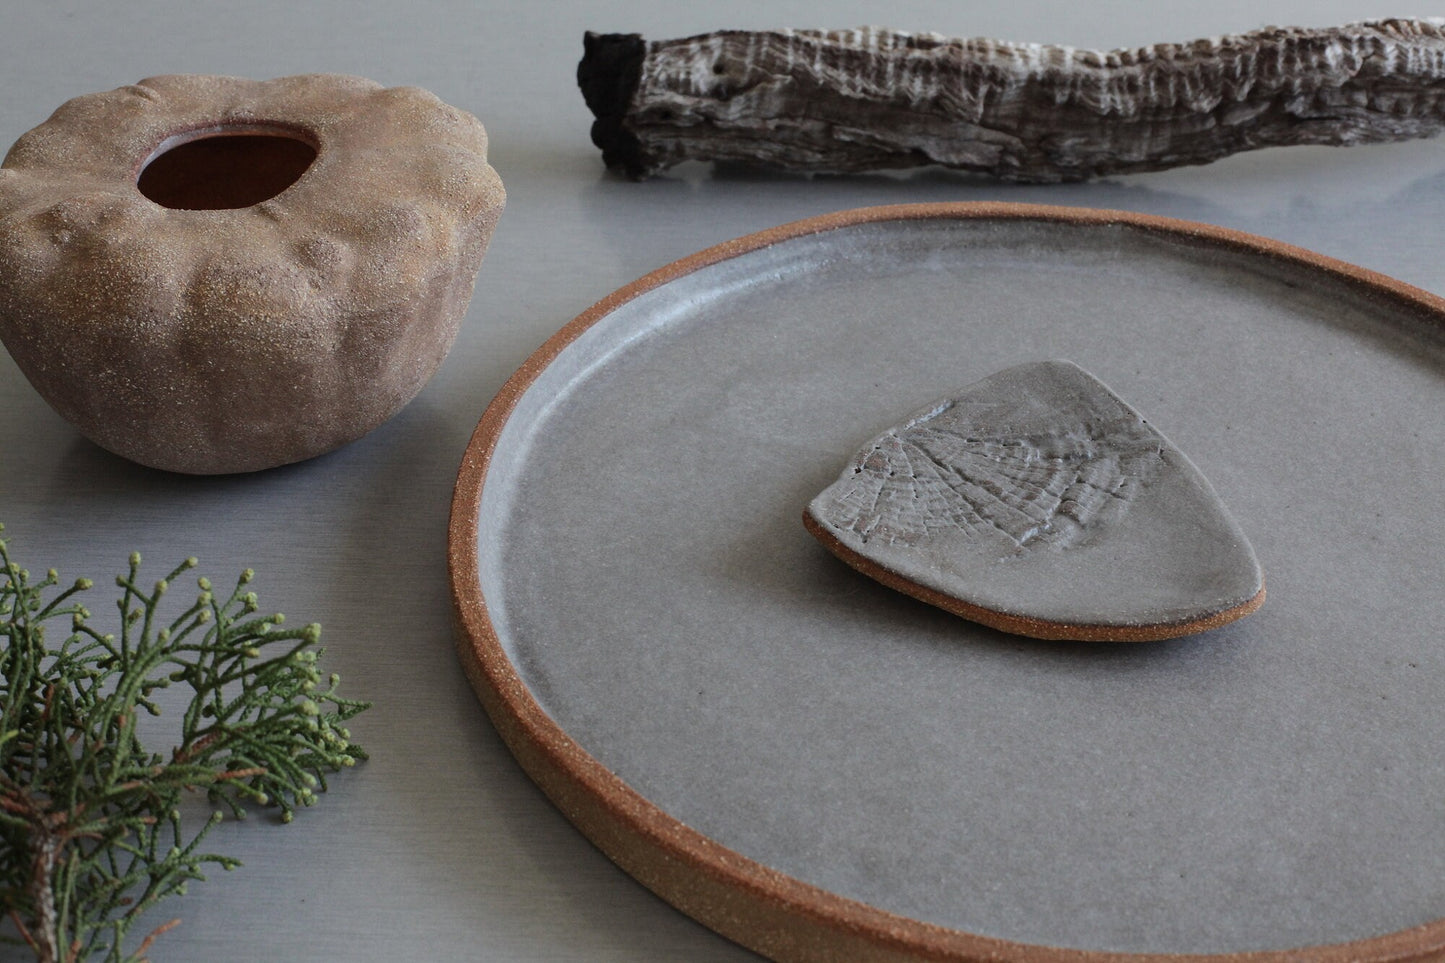 Wood grain textured ceramic dish, incense holder